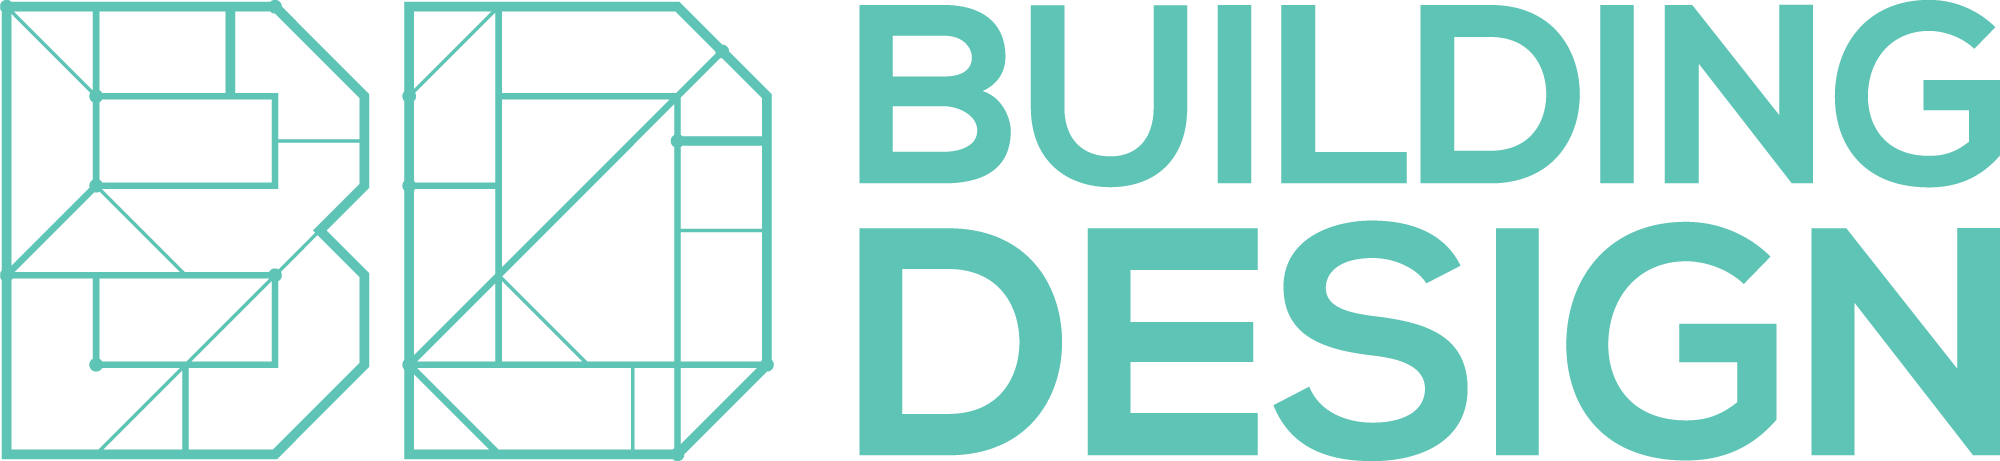 BD Building Design